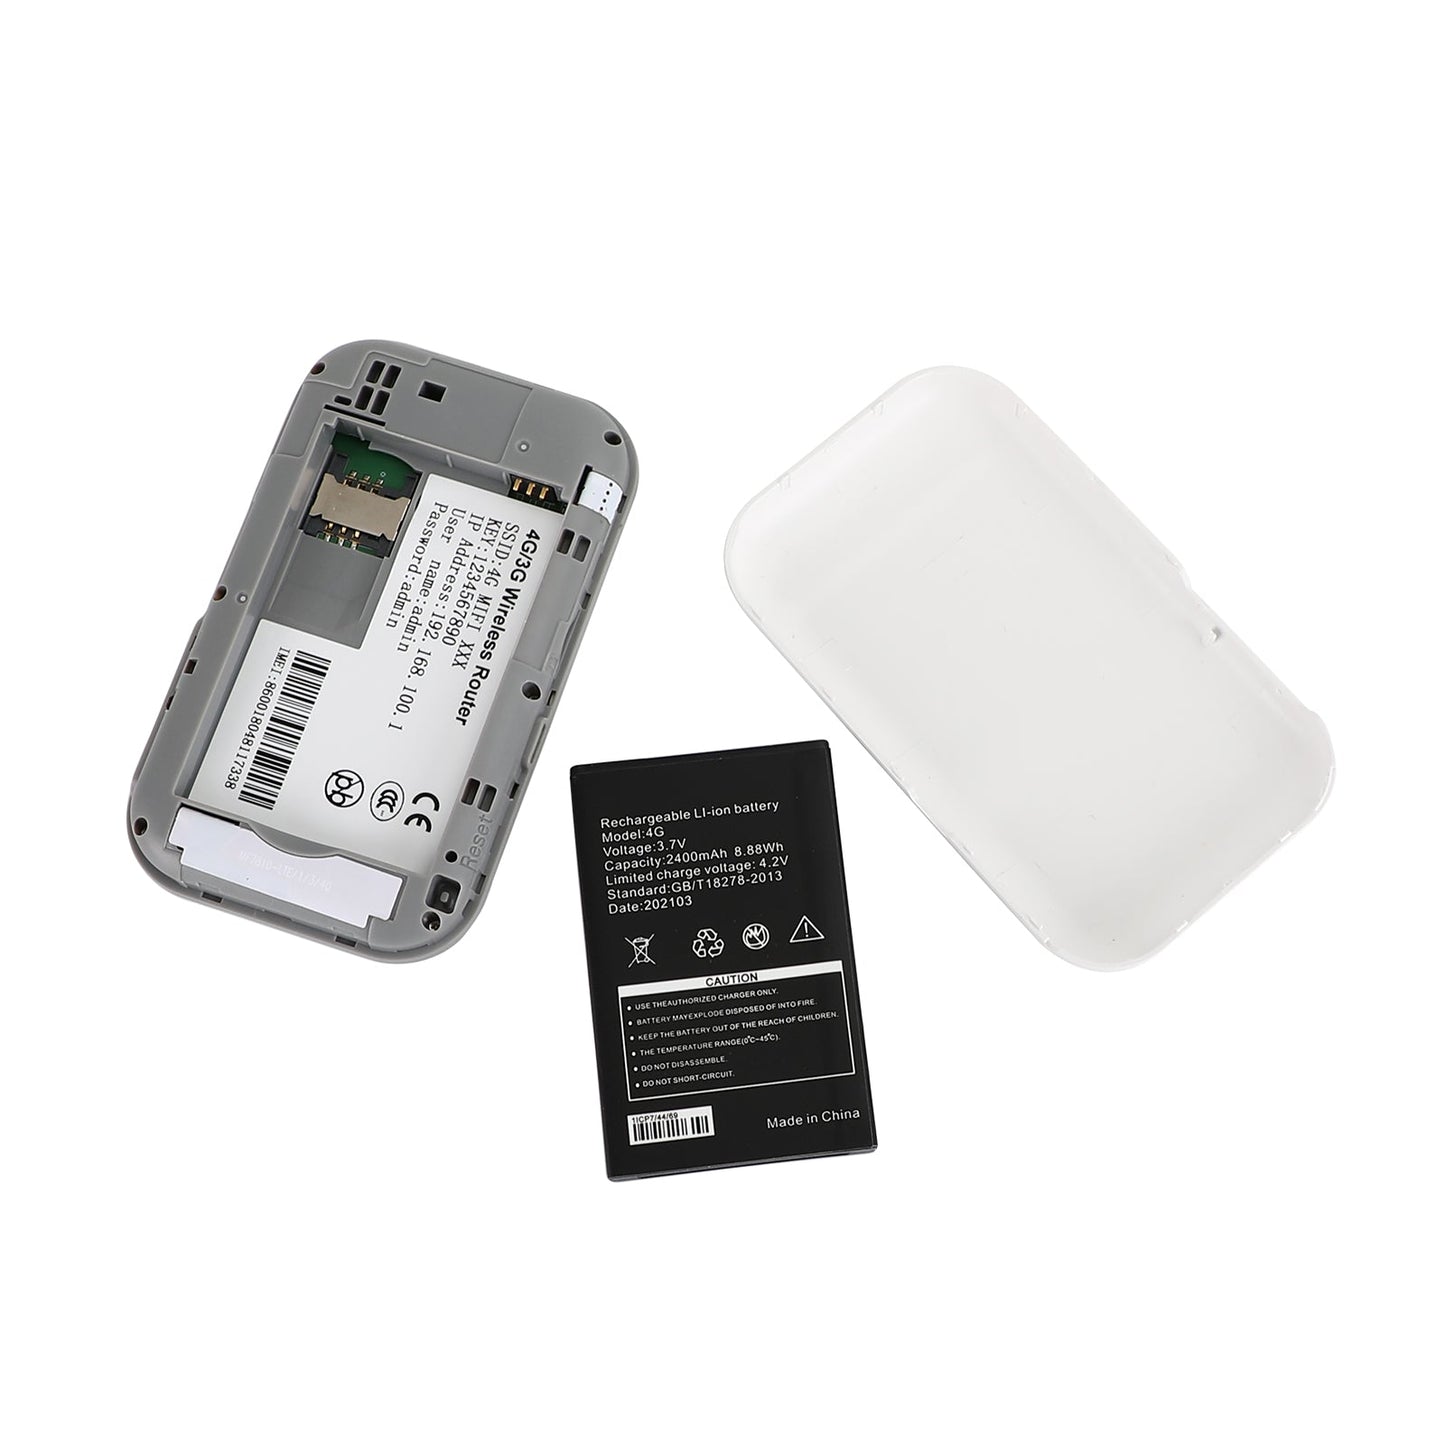 Wireless Unlocked 4G LTE Mobile Portable WiFi Router SIM Card MIFI Modem Hotspot